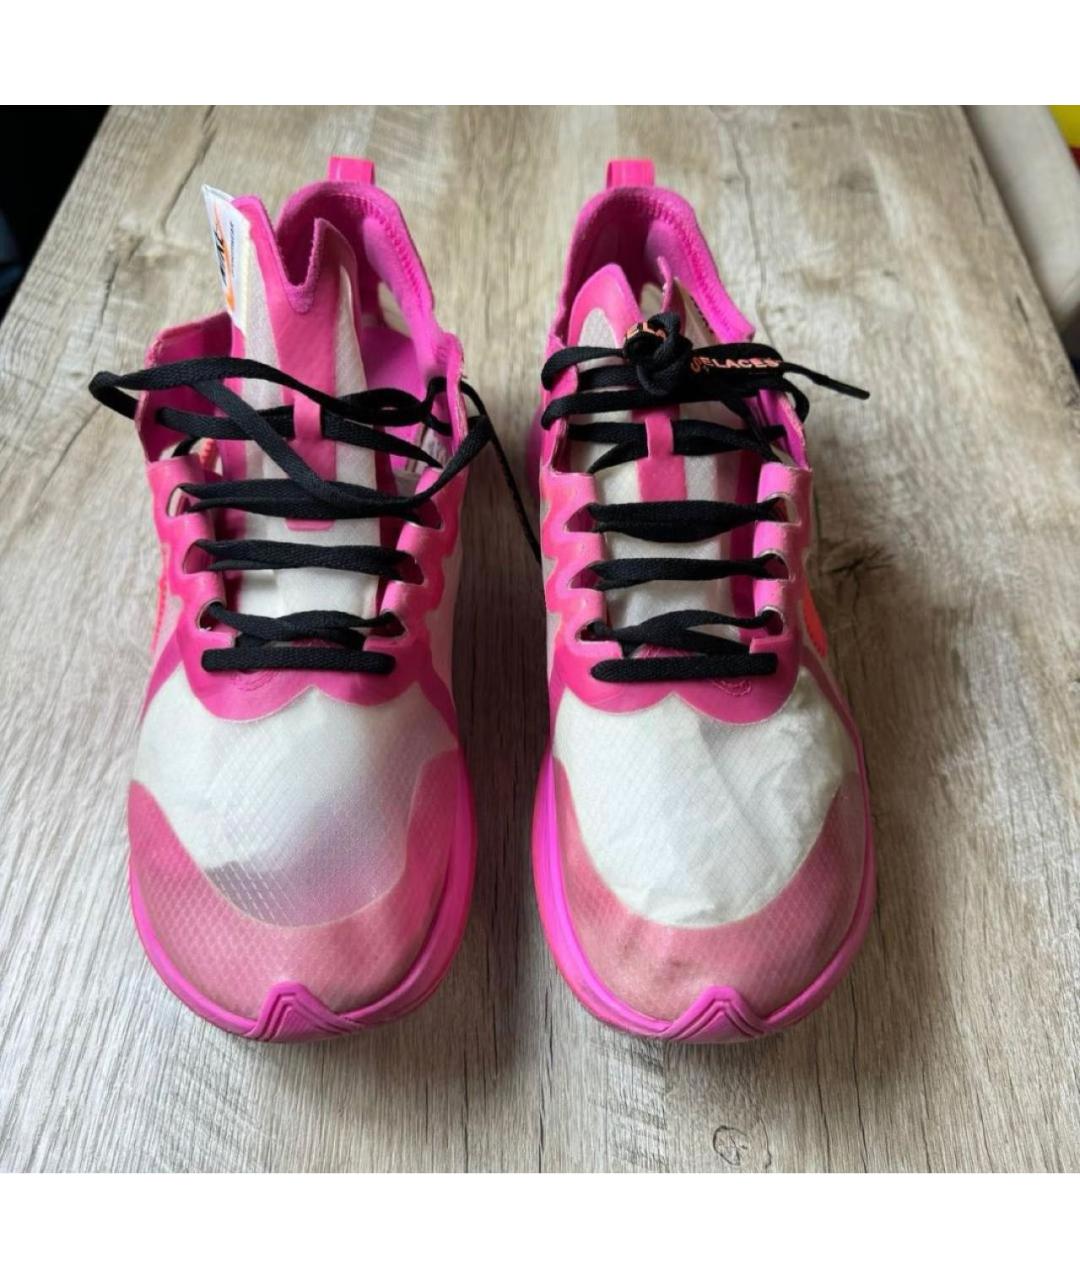 NIKE X OFF-WHITE Розовые синтетические низкие кроссовки / кеды, фото 2